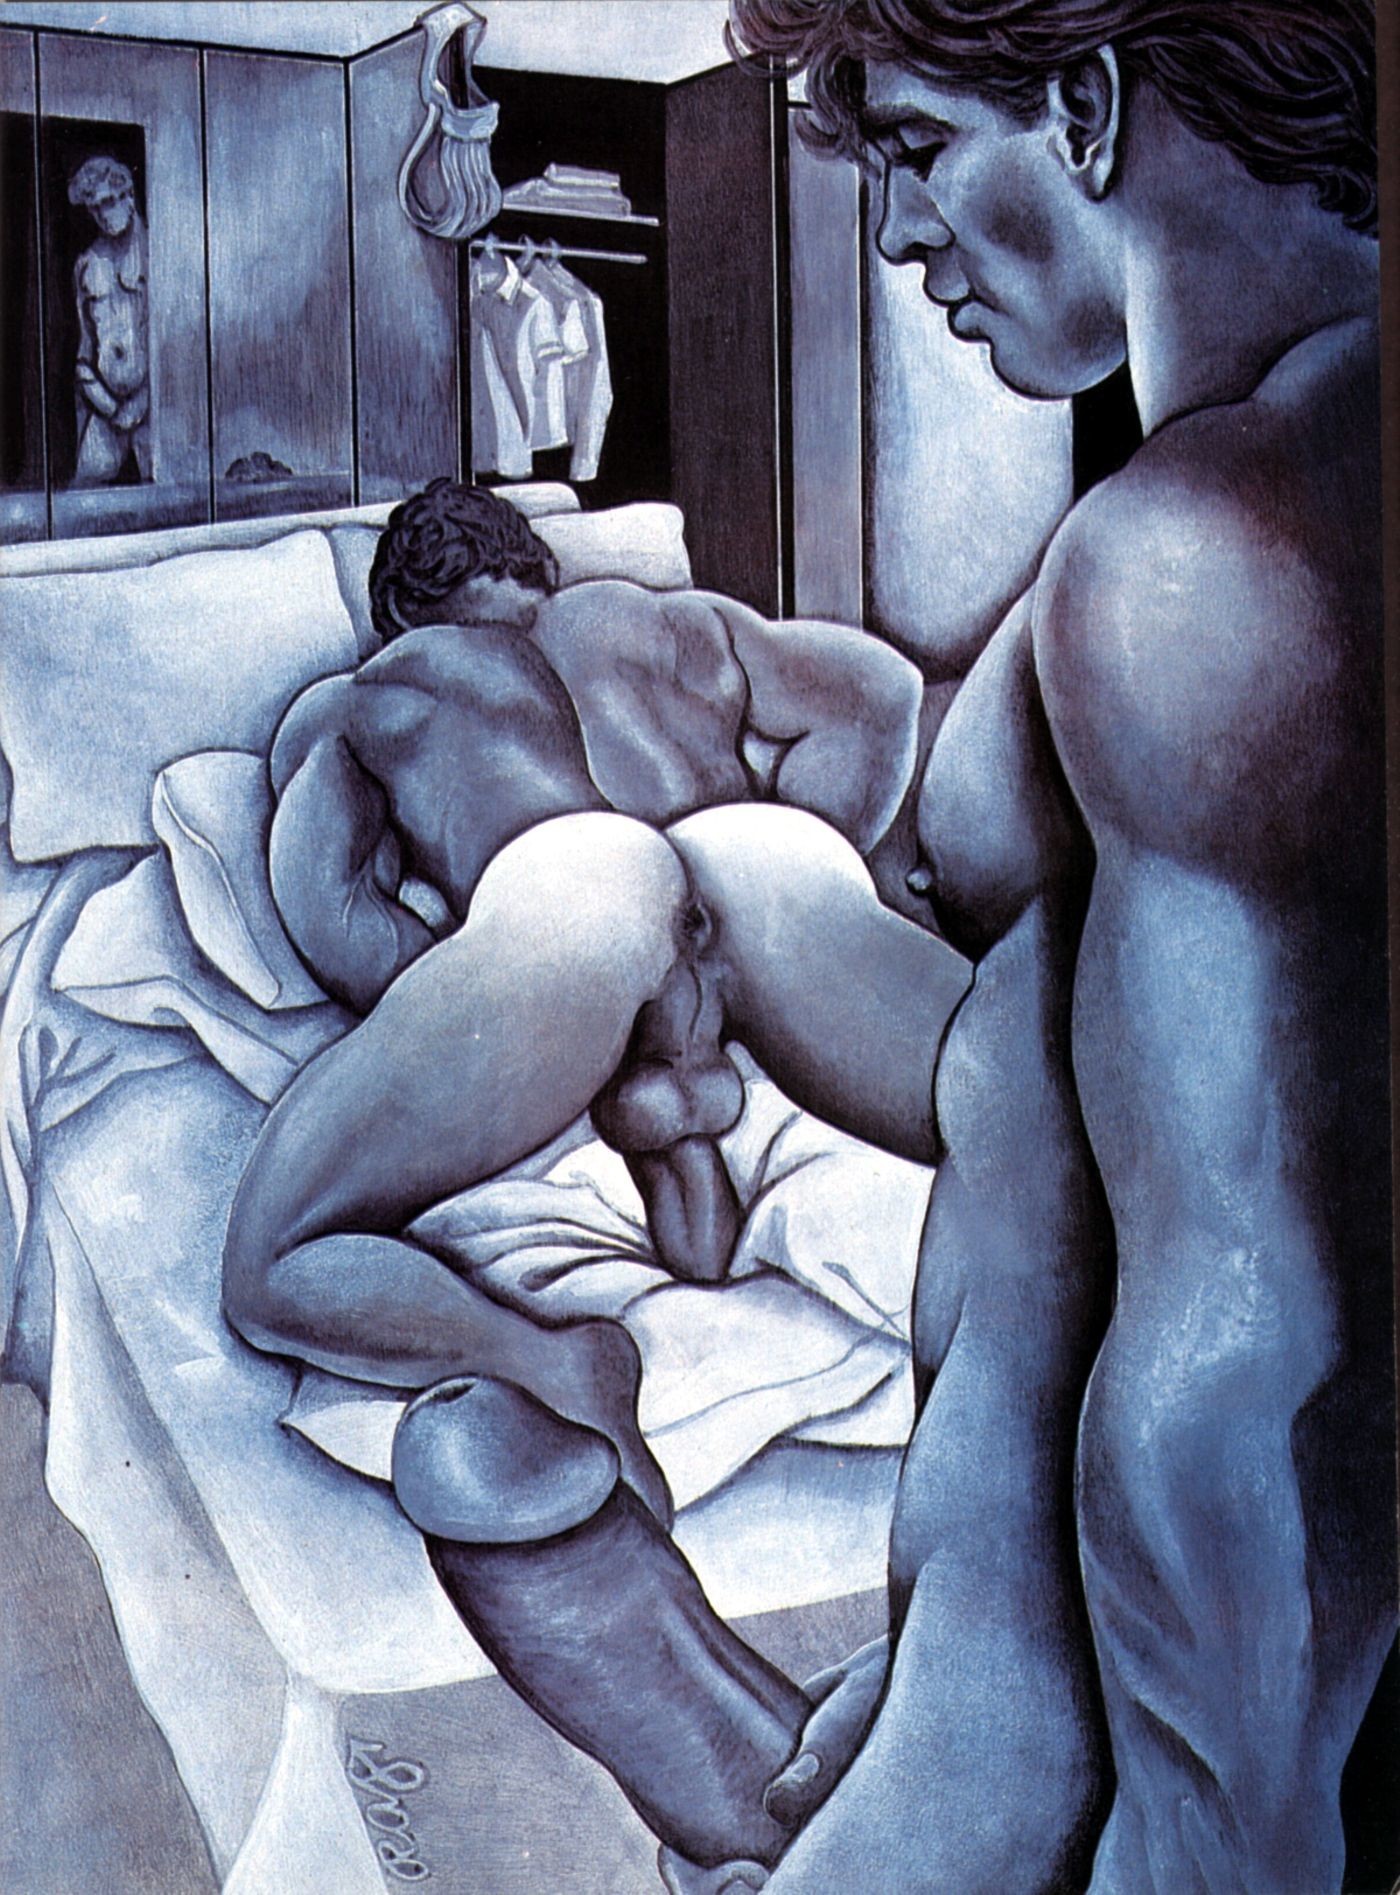 Stuart blaetz drawings of male nude, portraits and erotic art. 